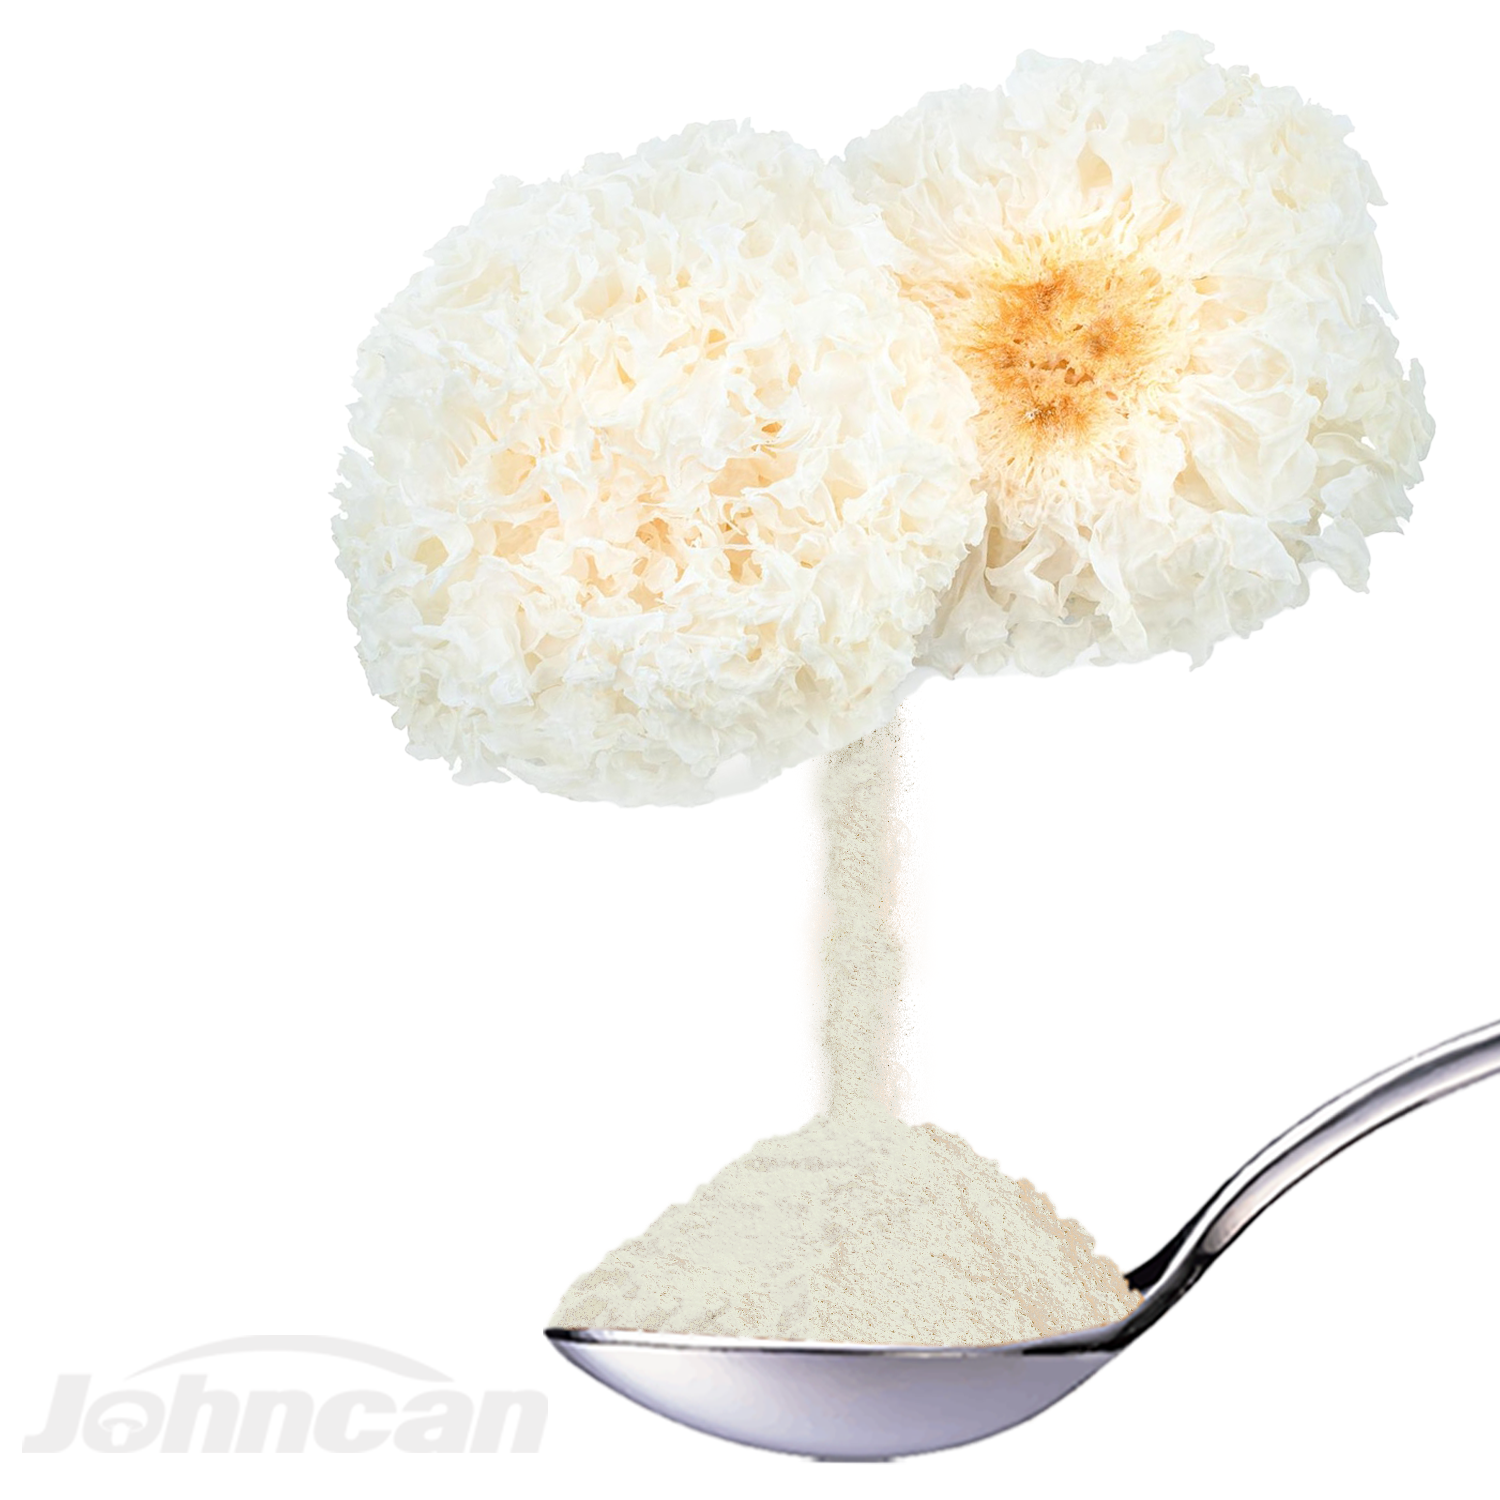 Factory Offer Private Label Herbal Mushroom Extract Powder Tremella Fuciformis, Snow Fungus